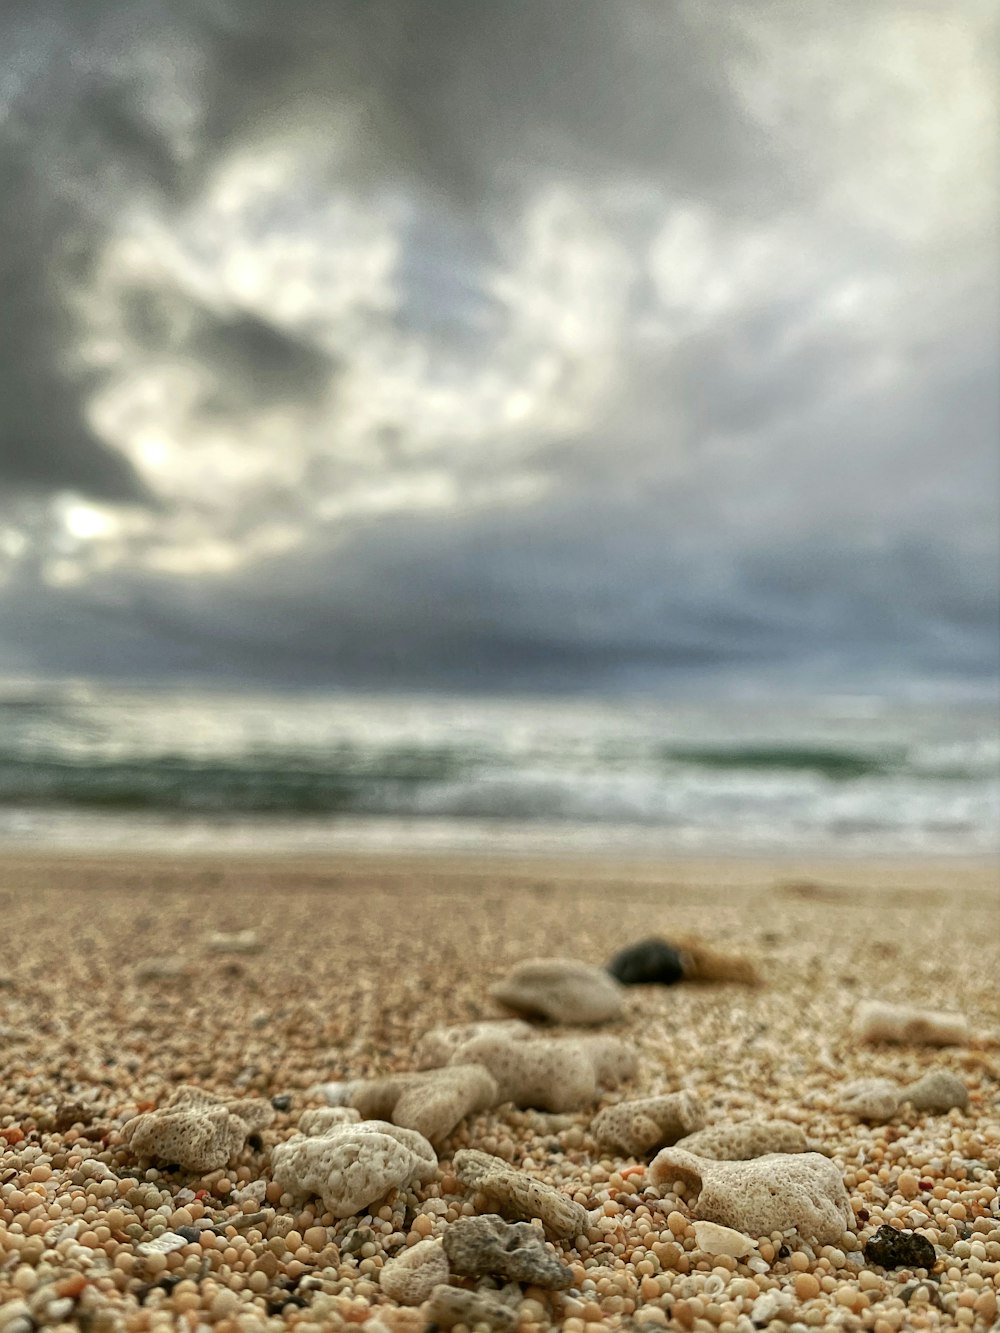 rocks and pebbles on a beach under a cloudy sky